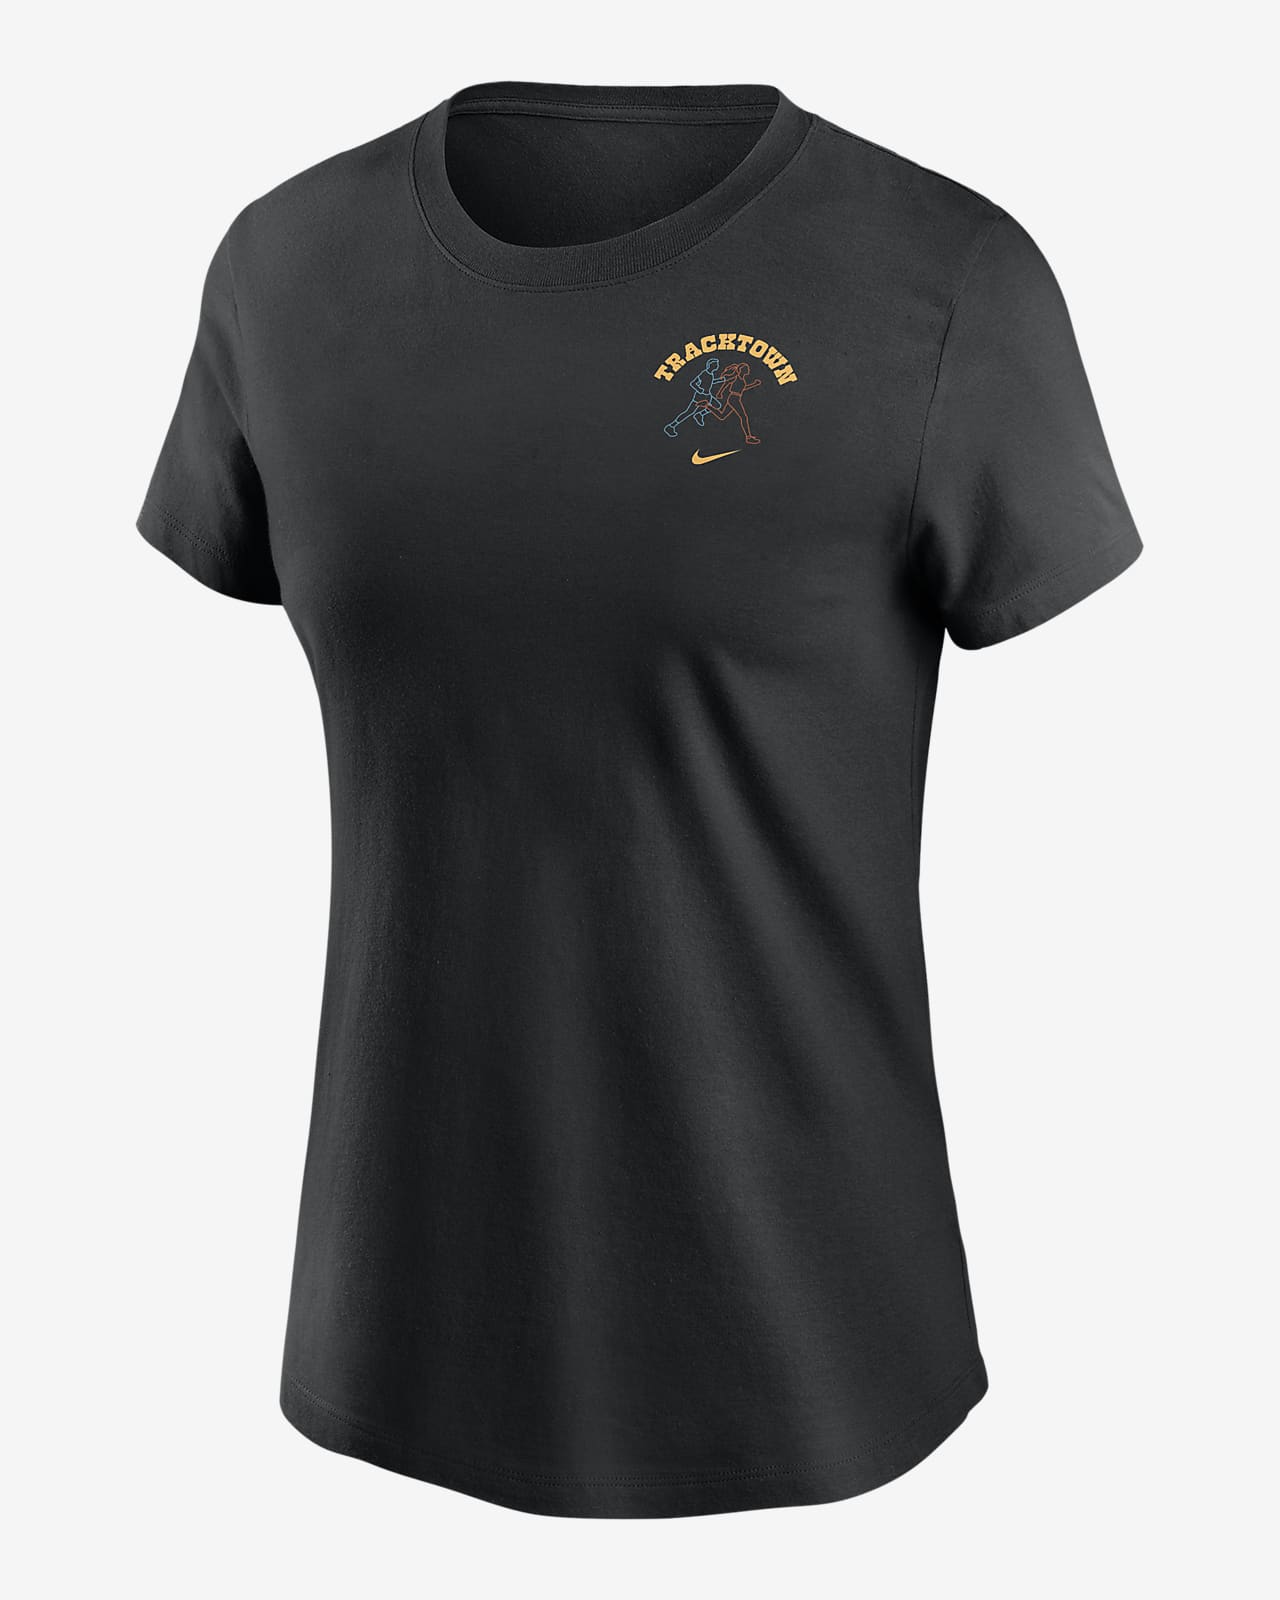 Nike Women's Running T-Shirt